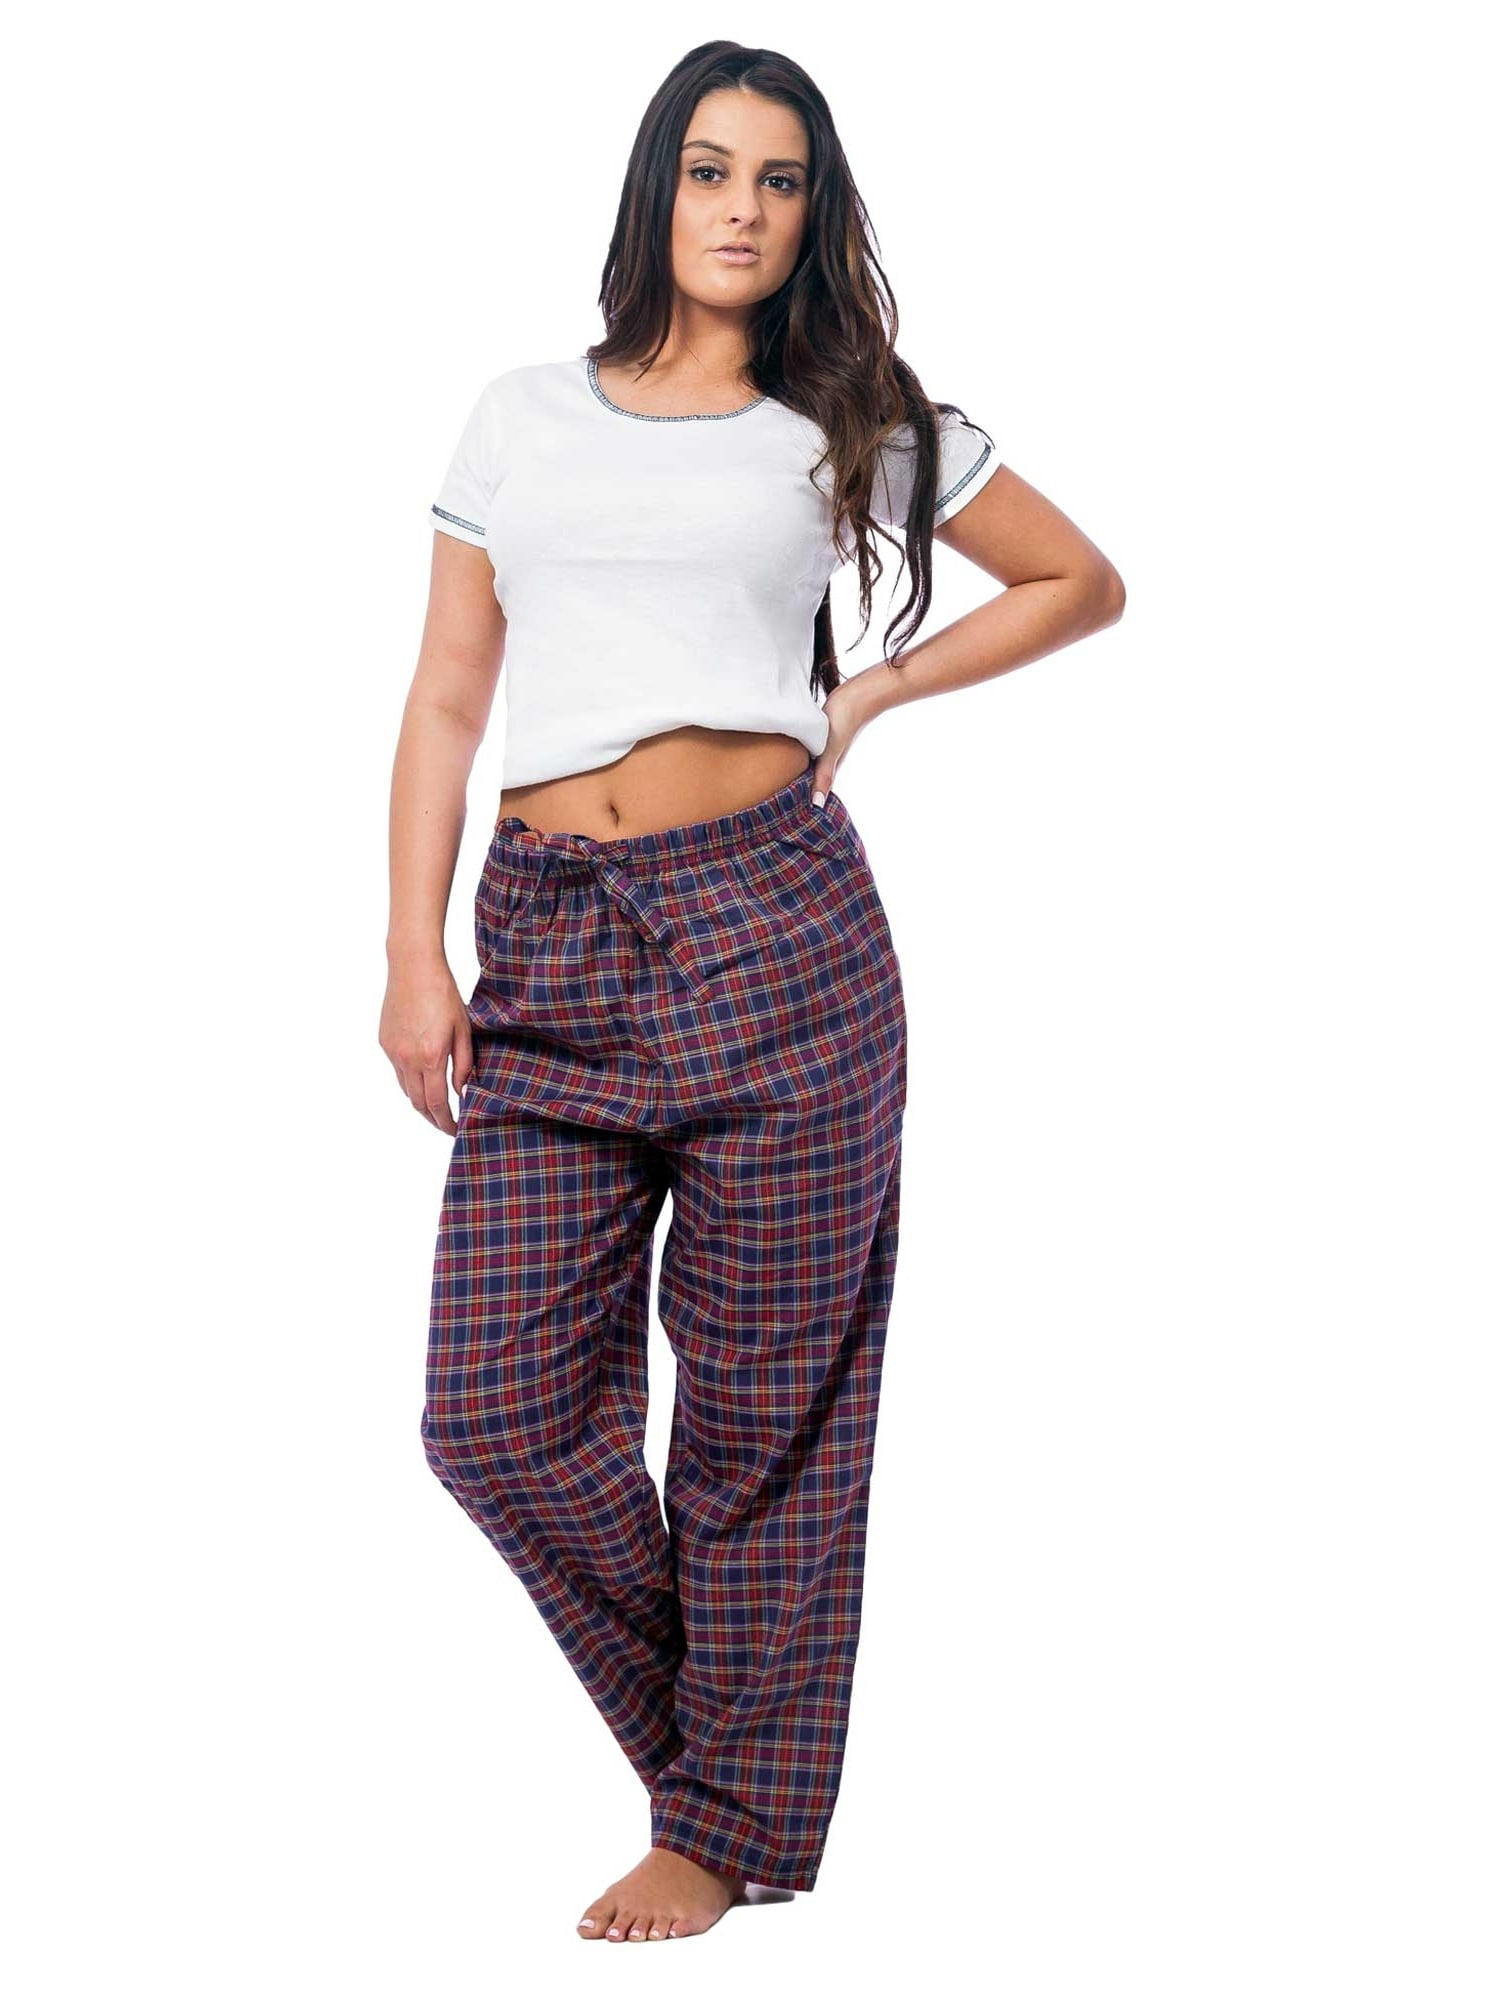 Up2date Fashions Womens Woven Lounge Pants Sleep Pants Pajama Bottoms 